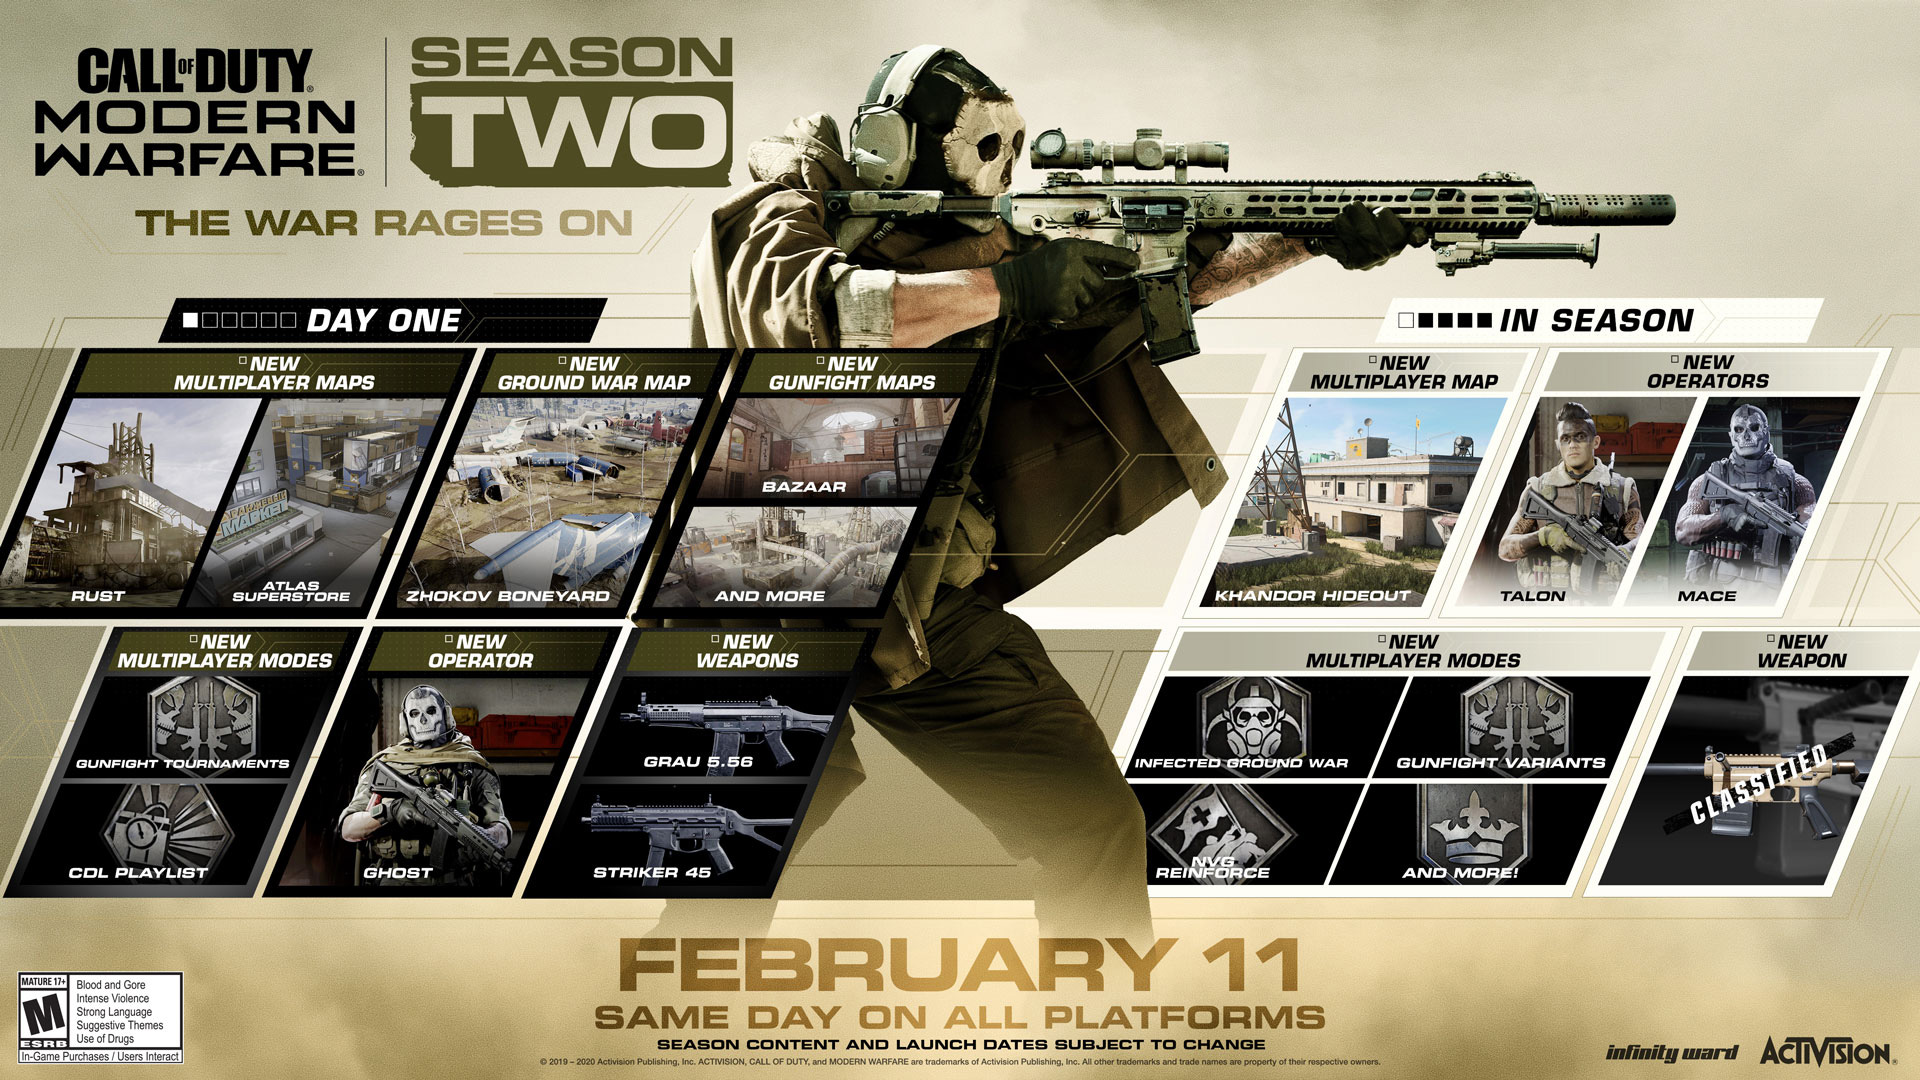 Calendrier de mise à jour de Call of Duty: Modern Warfare Saison 2